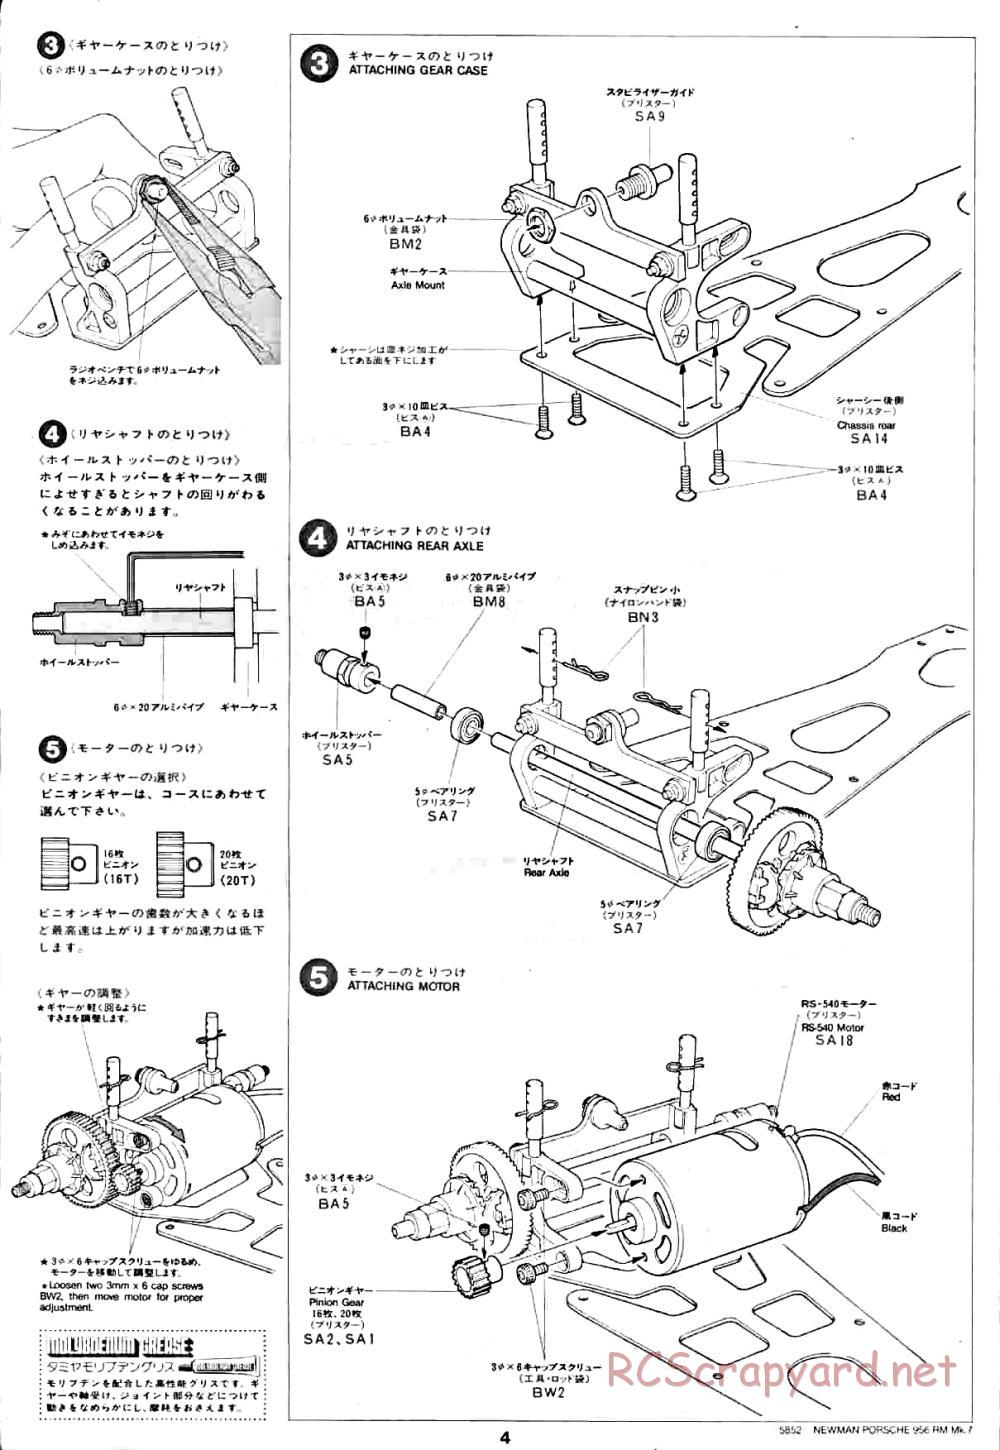 Tamiya - Newman Prsch 956 - RM MK.7 - 58052 - Manual - Page 4